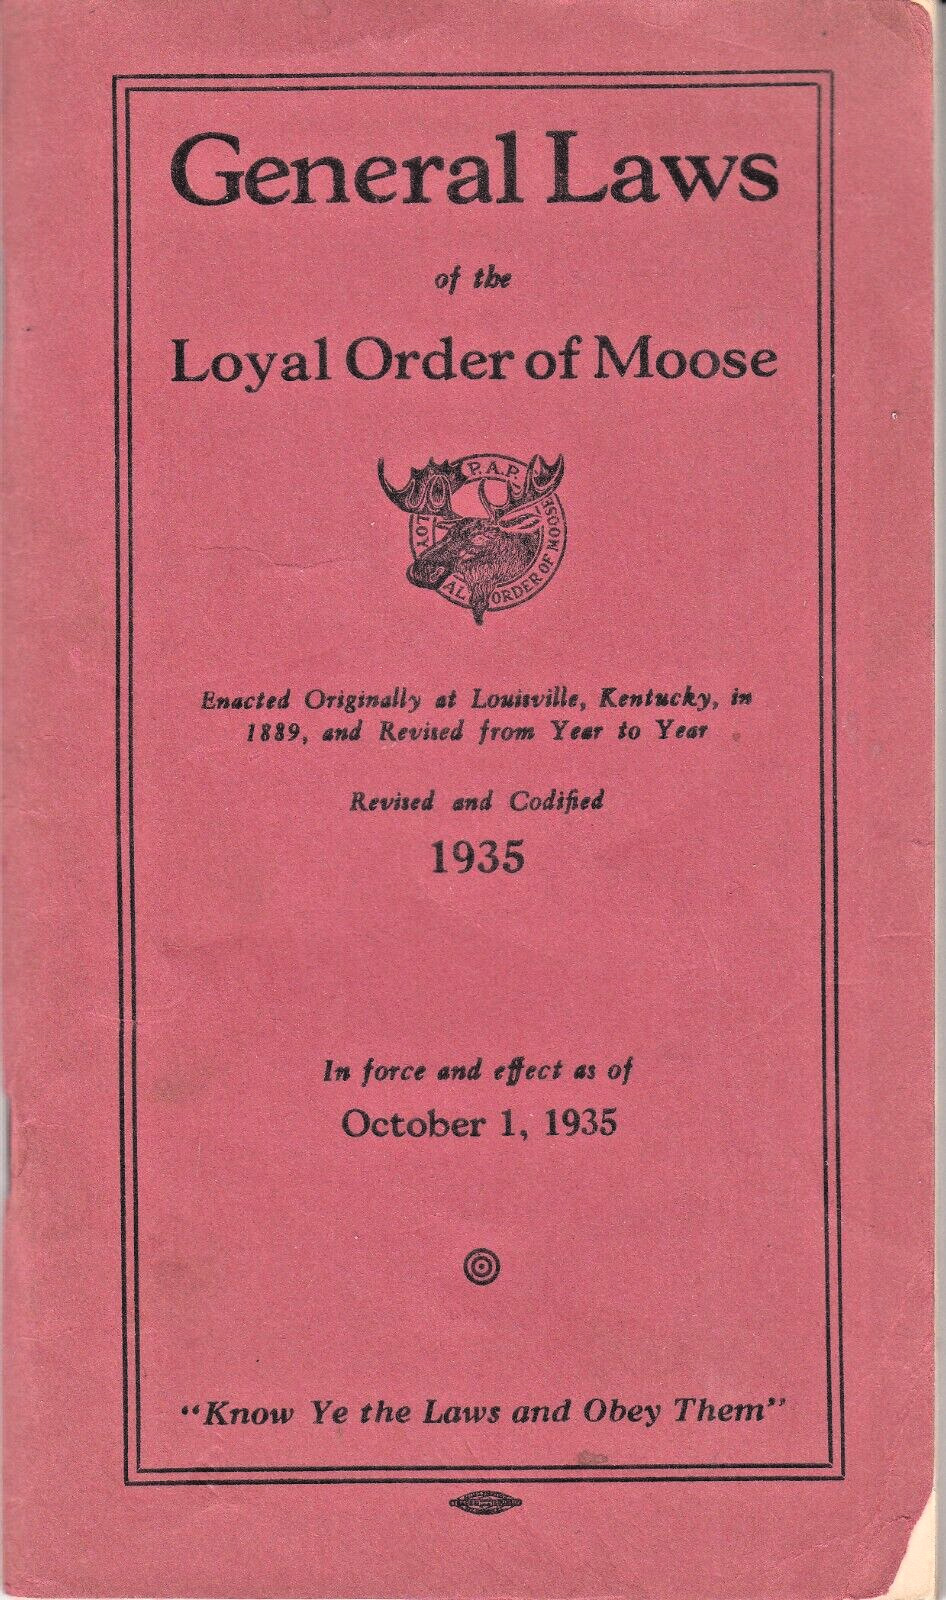 Vintage 1935 Loyal Order of Moose General Laws booklet